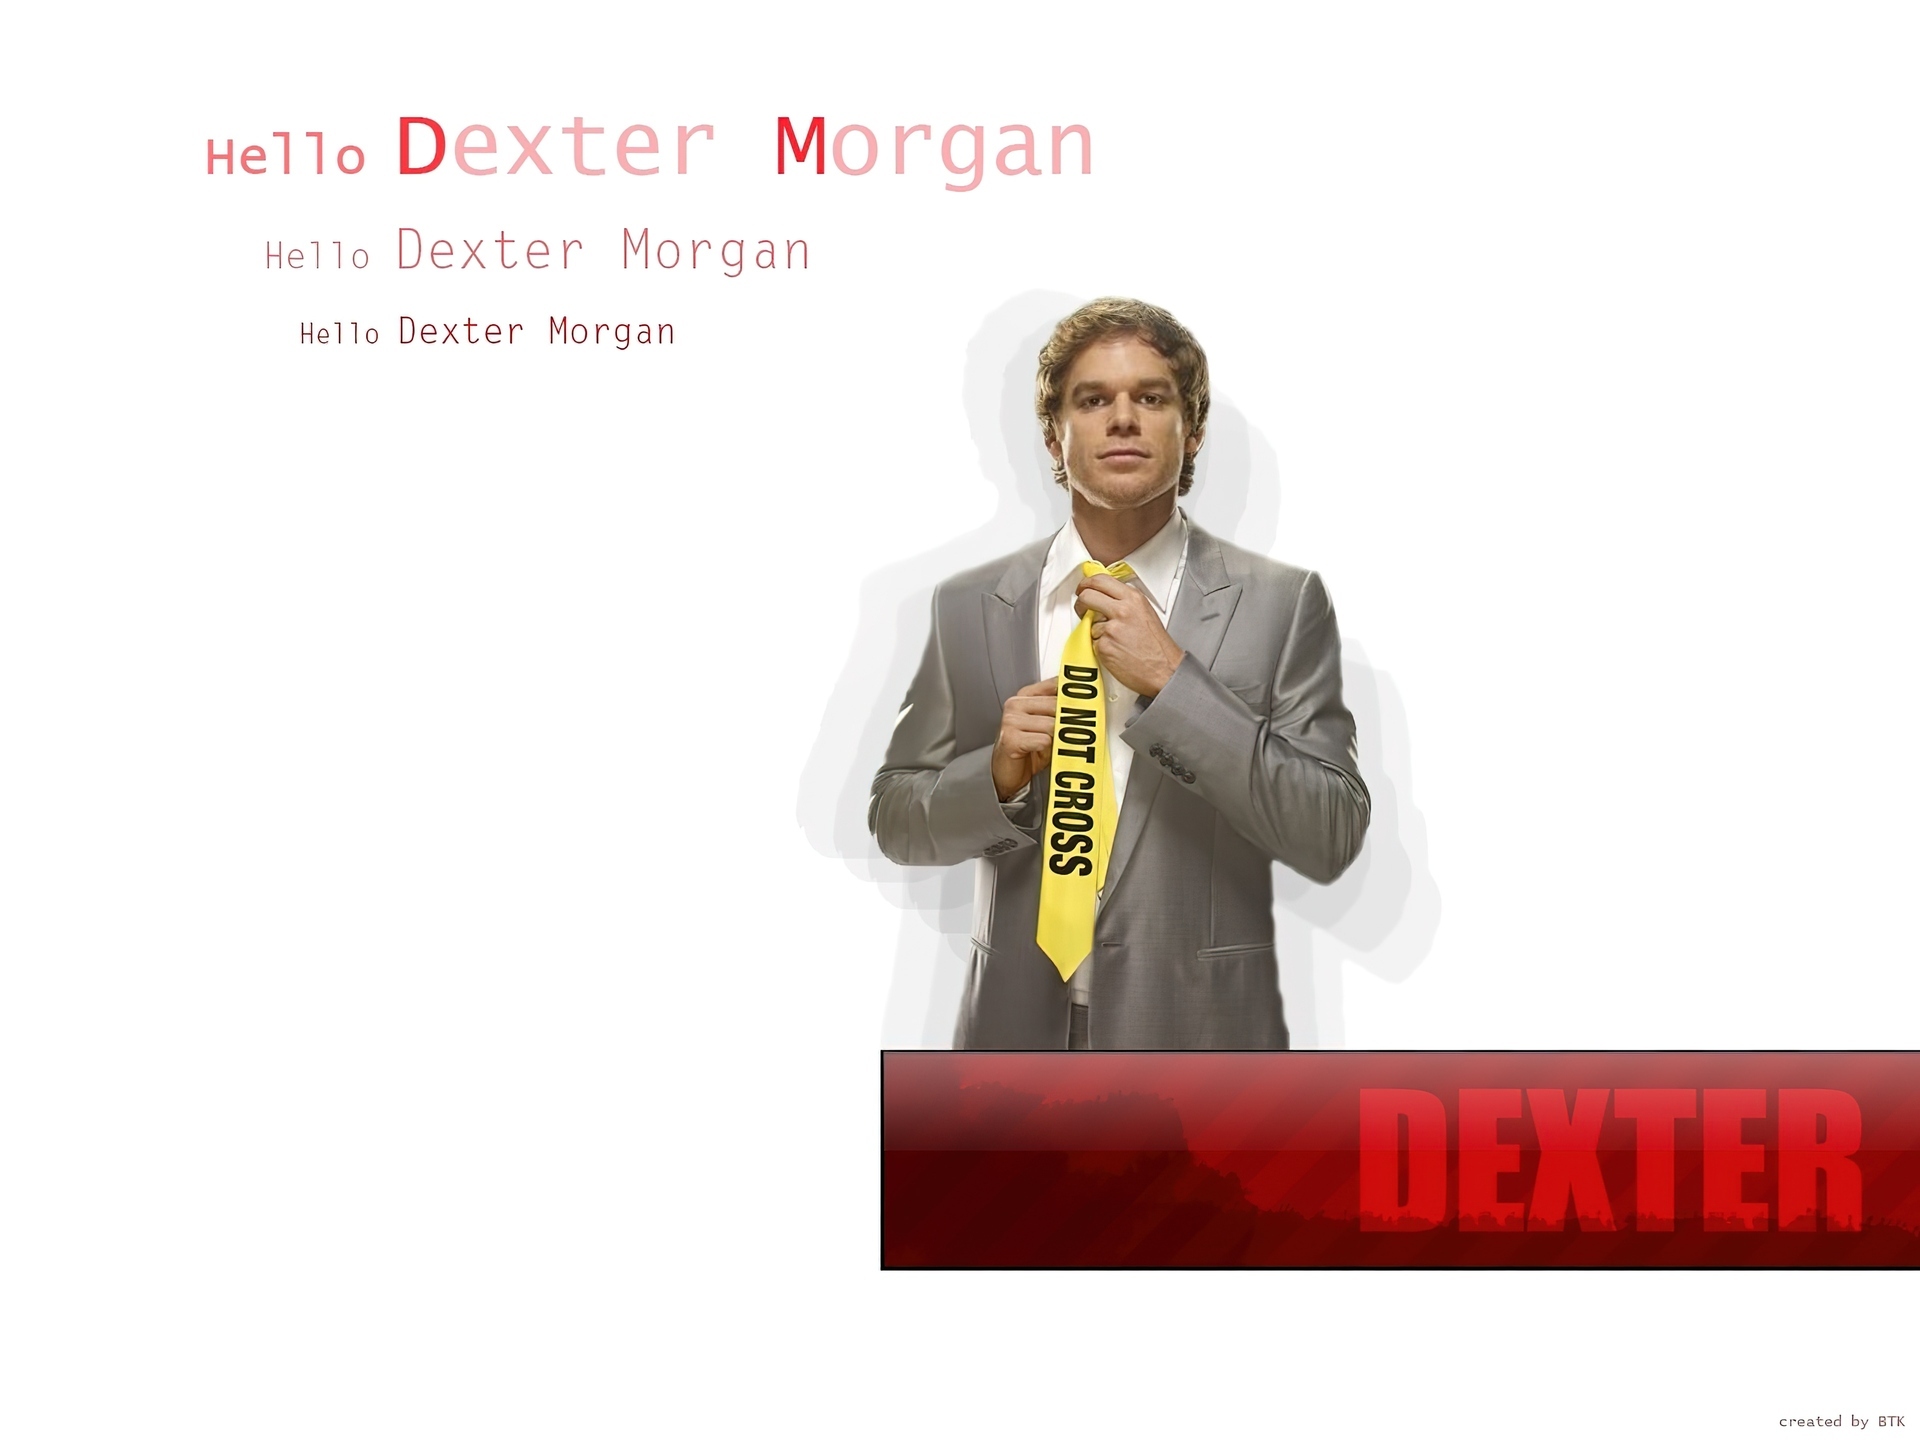 Dexter, Krawat, Michael C. Hall